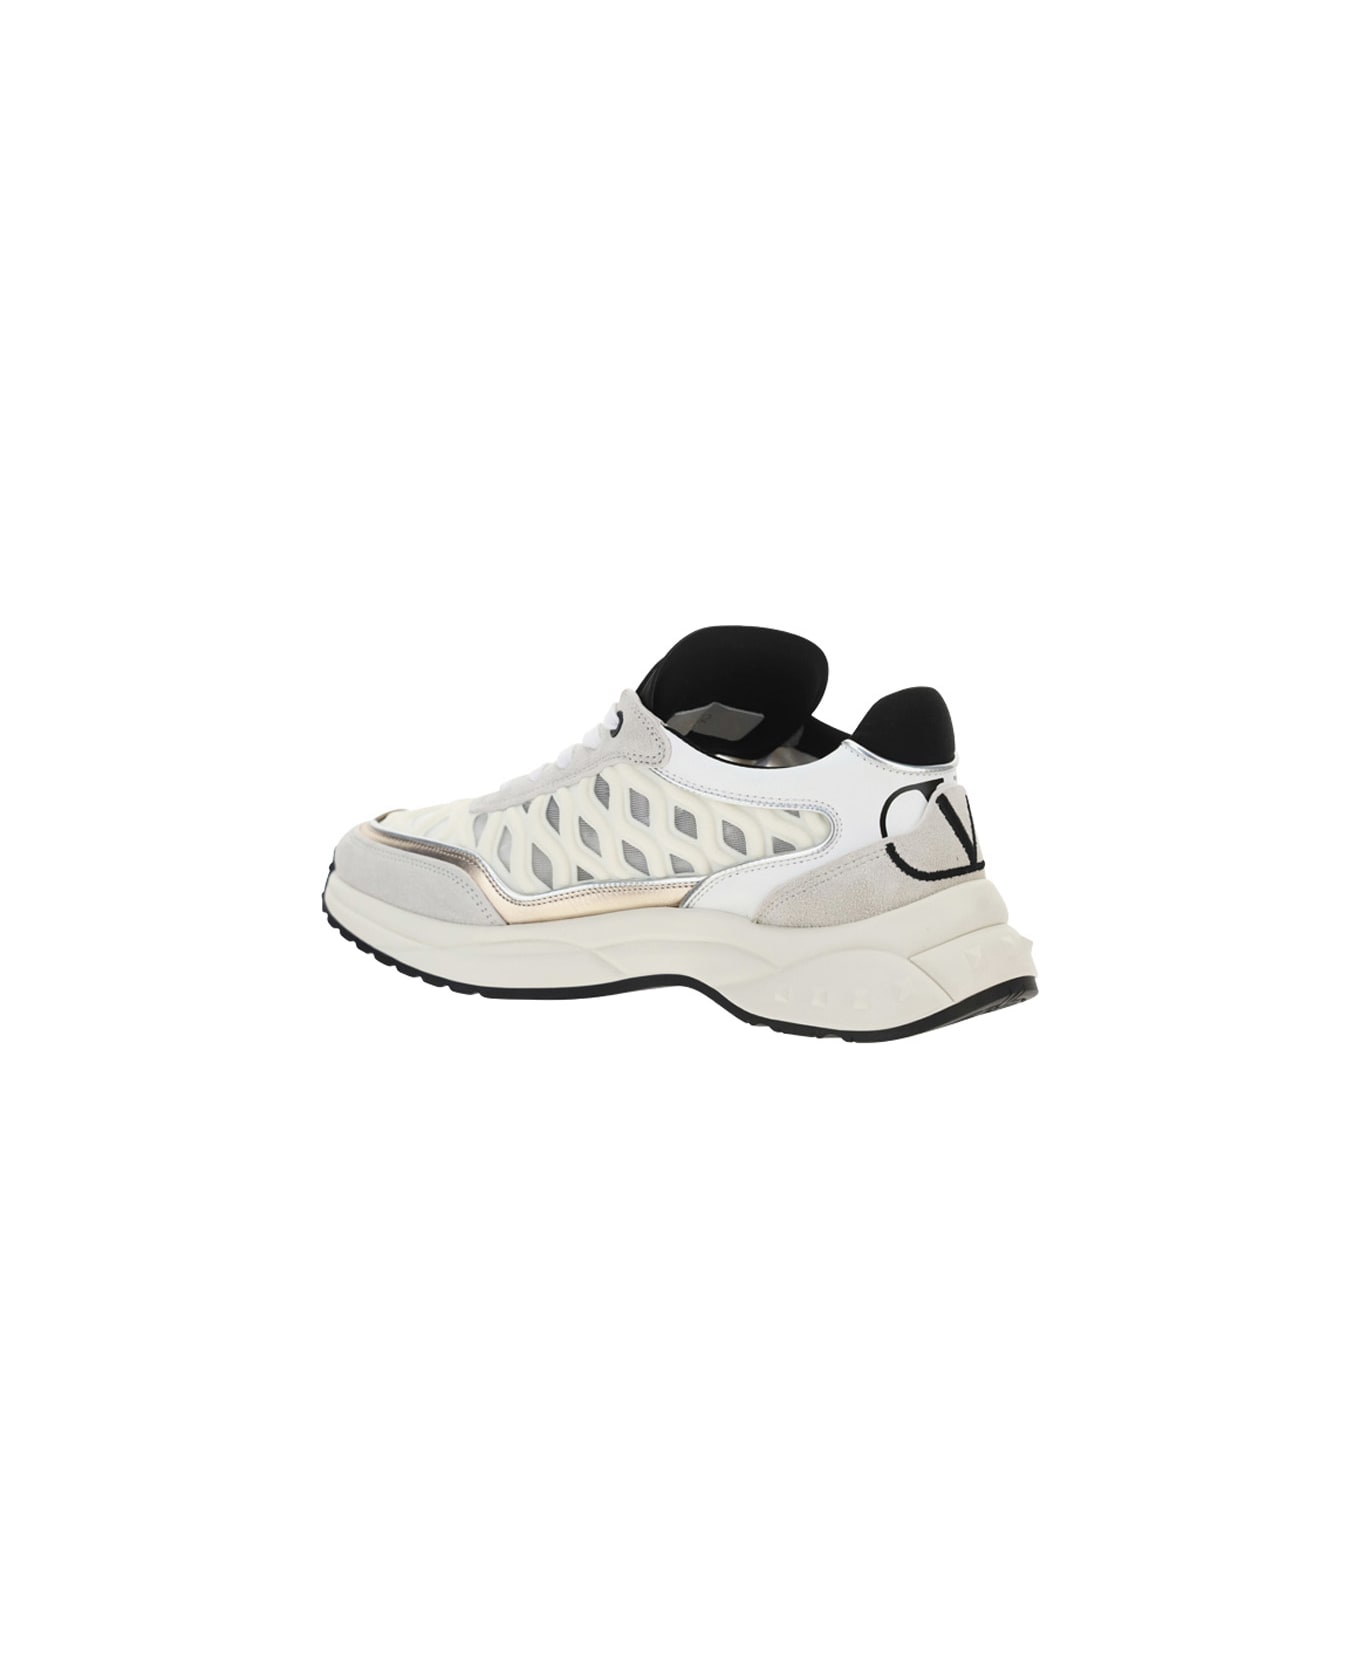 Valentino Garavani Sneakers - White/black